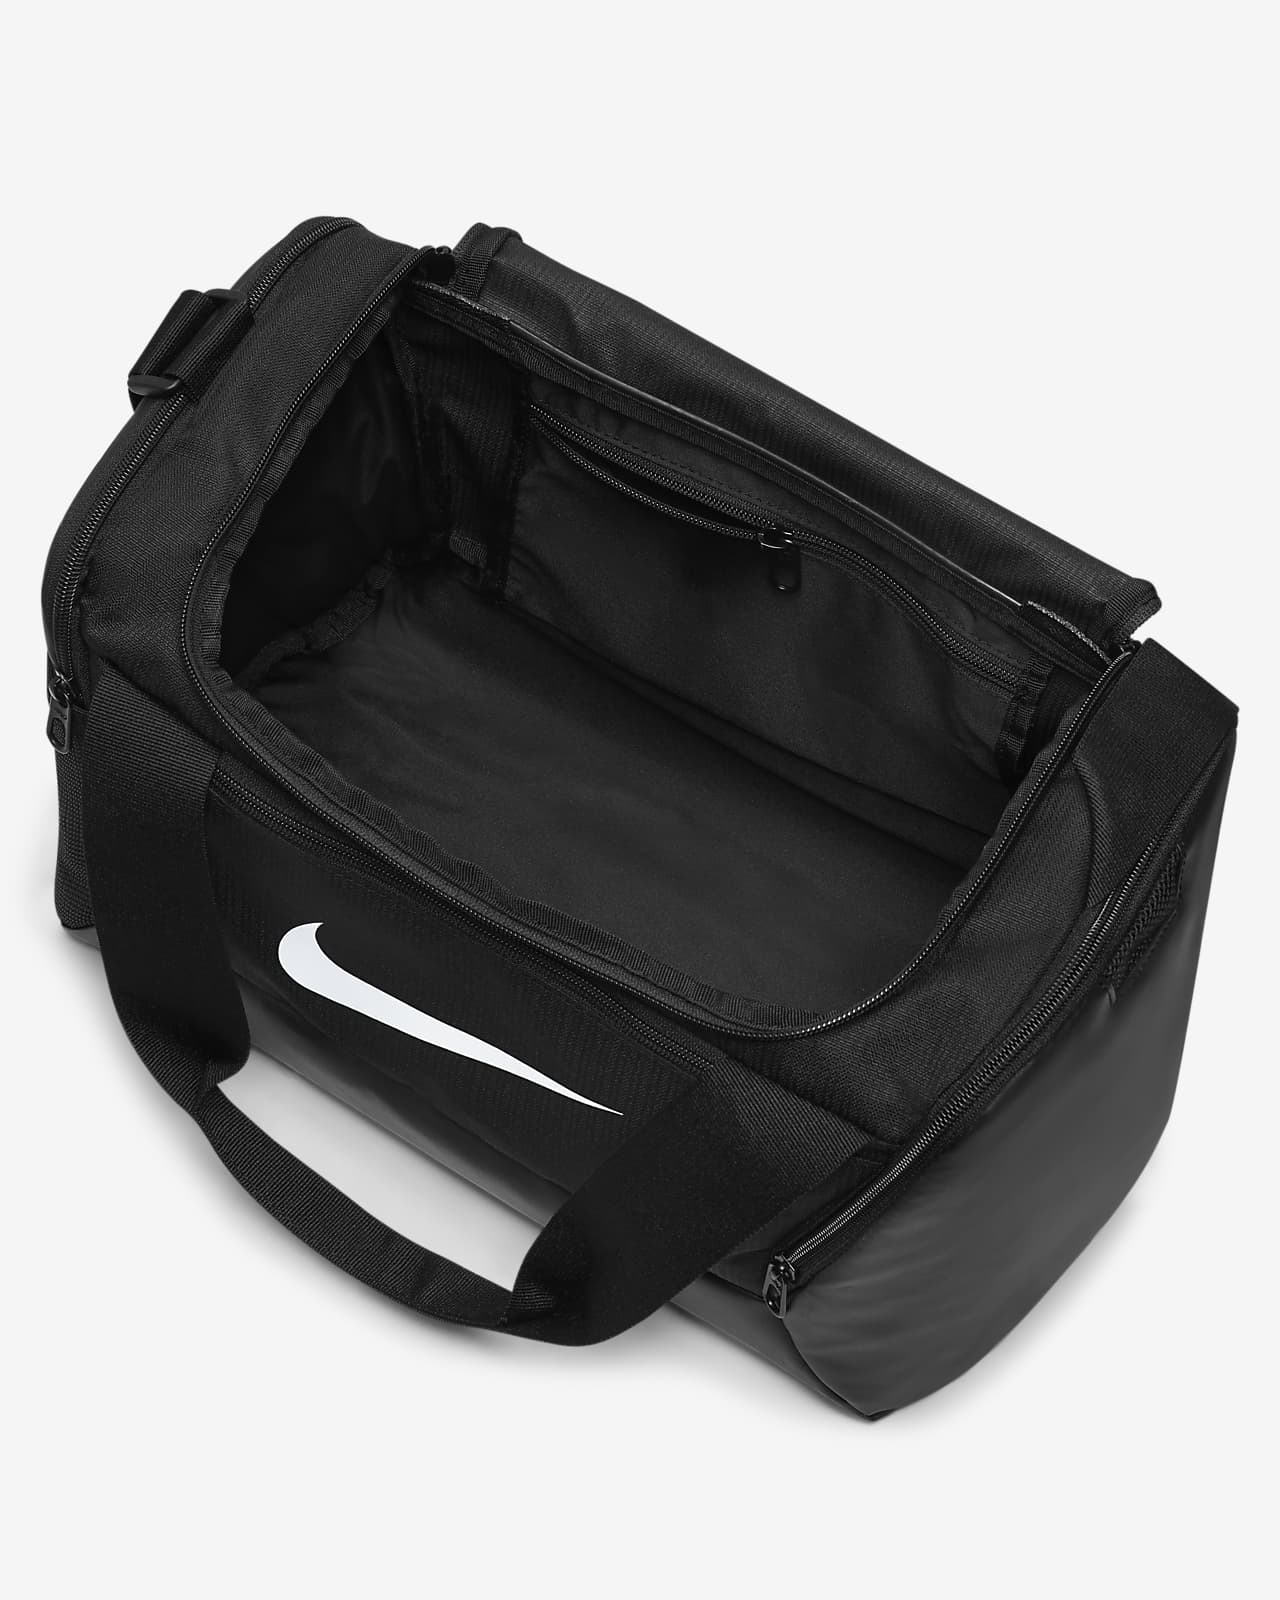 Travel bag on wheels Nike Highly-durable - Nike - Brands - Equipment